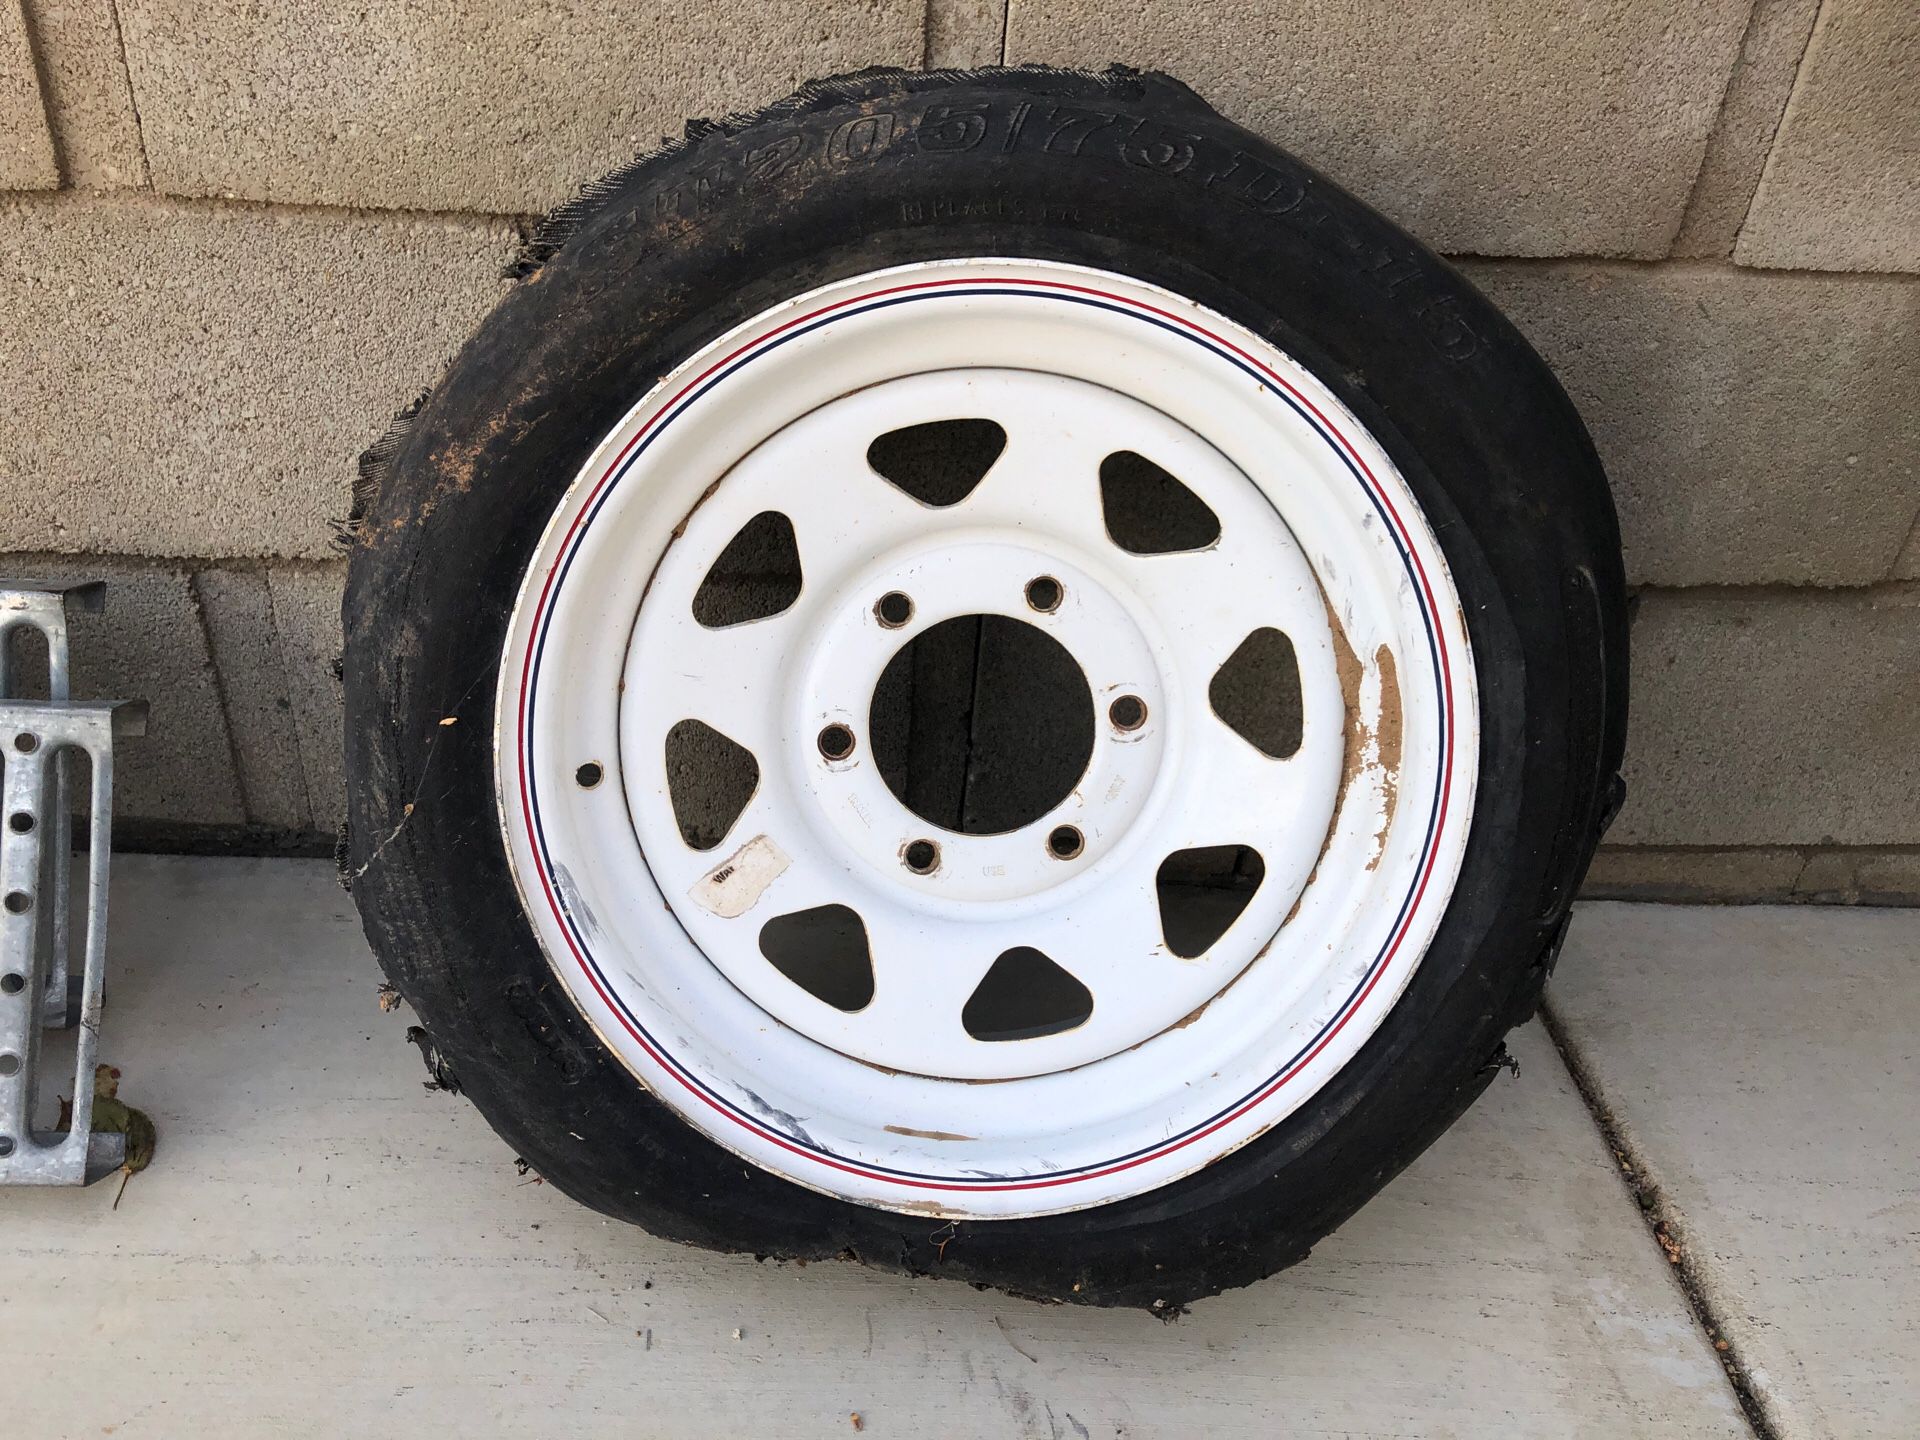 15” 6 lug trailer wheel - tire is blown, wheel is perfect